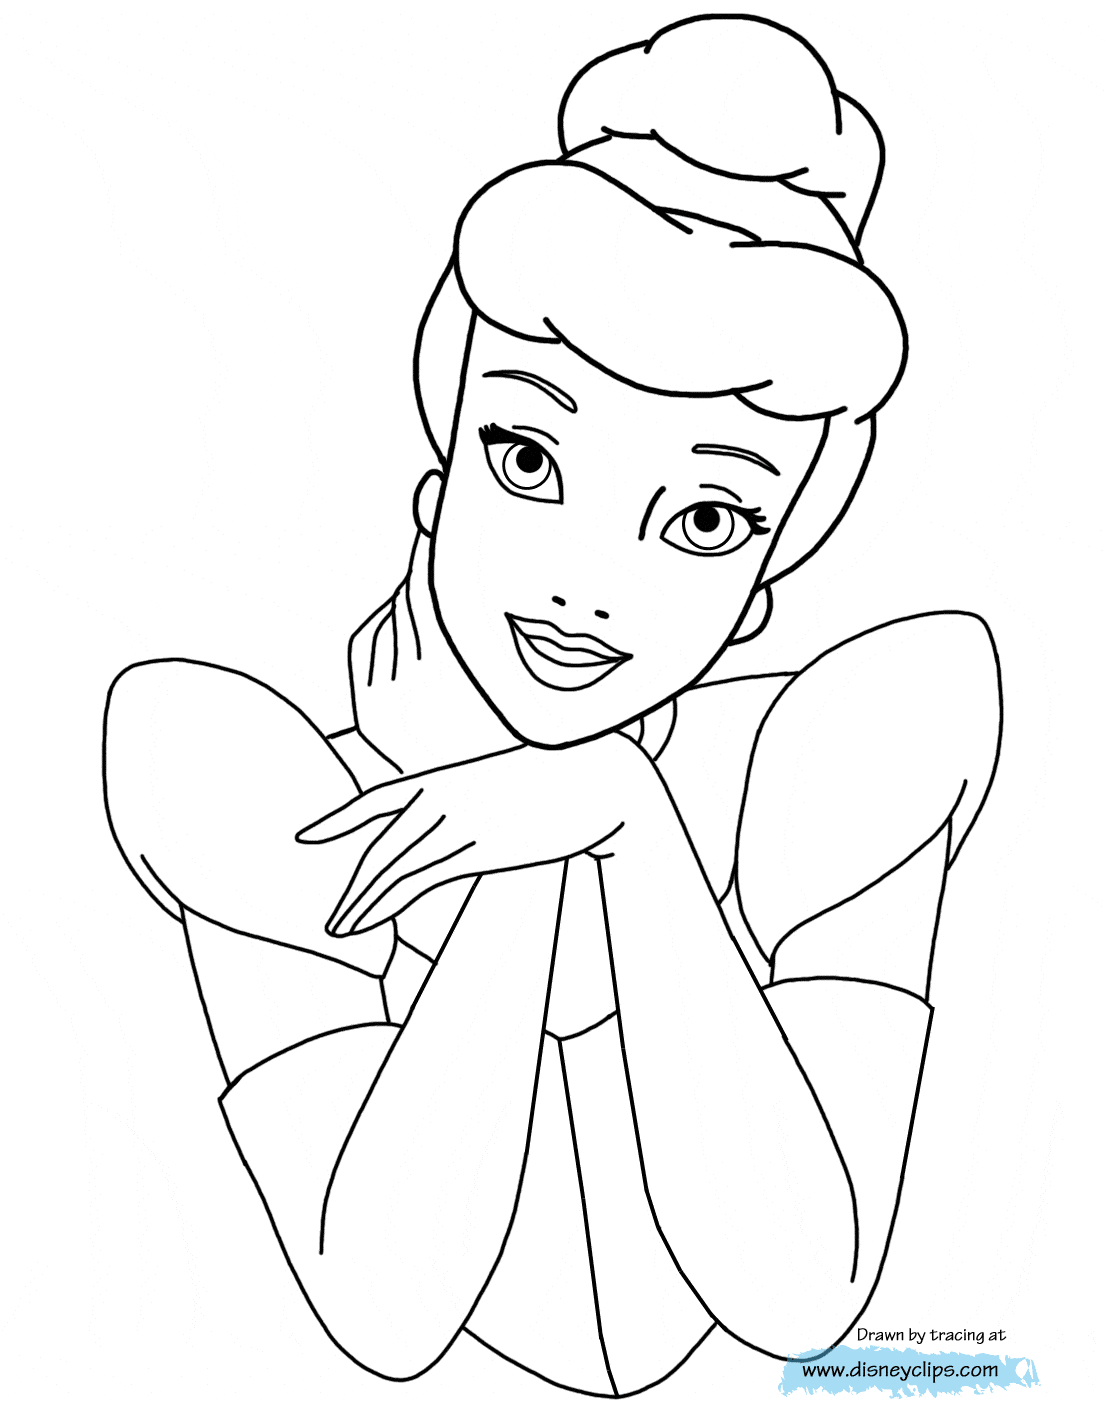 Cinderella Coloring Pages Disneyclips